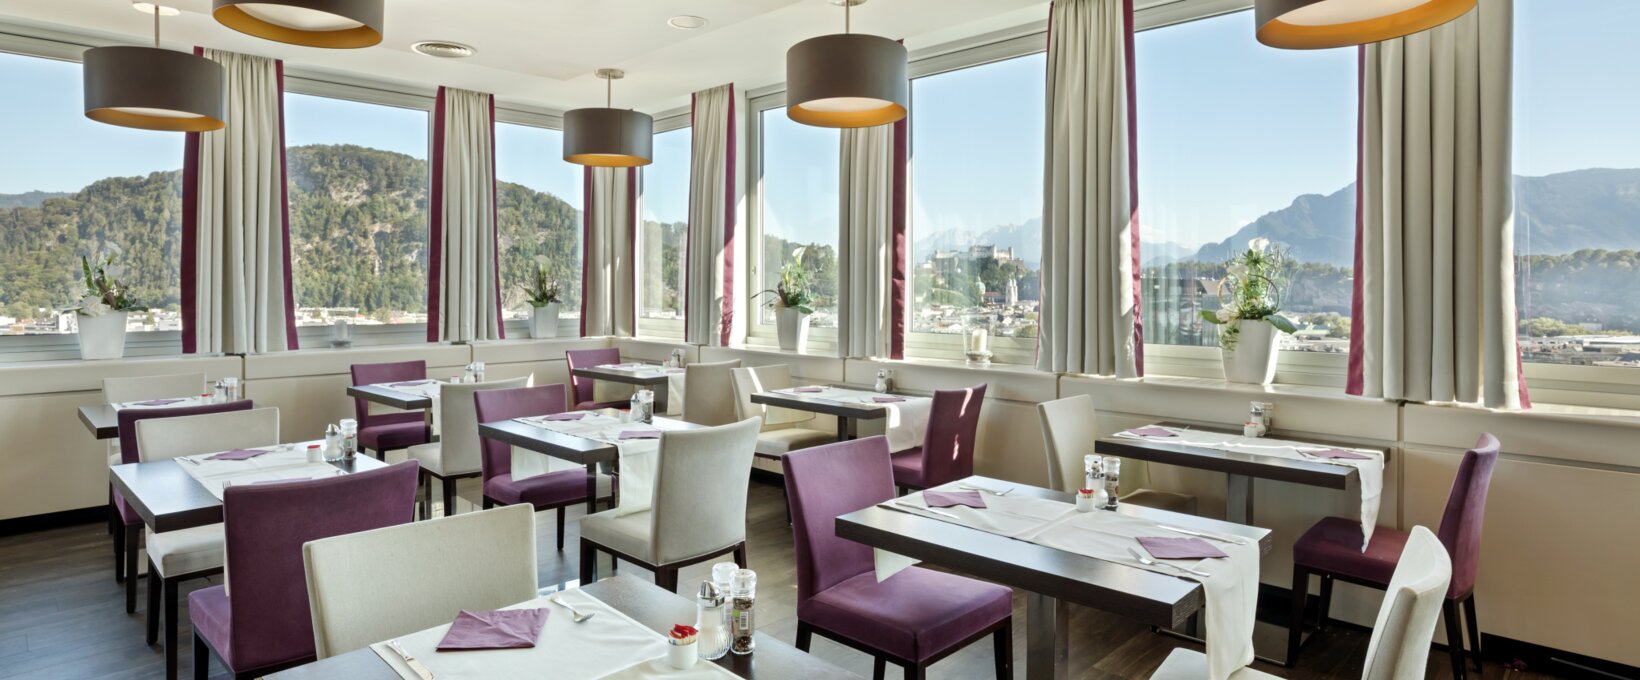 Restaurant with a view | Hotel Europa Salzburg